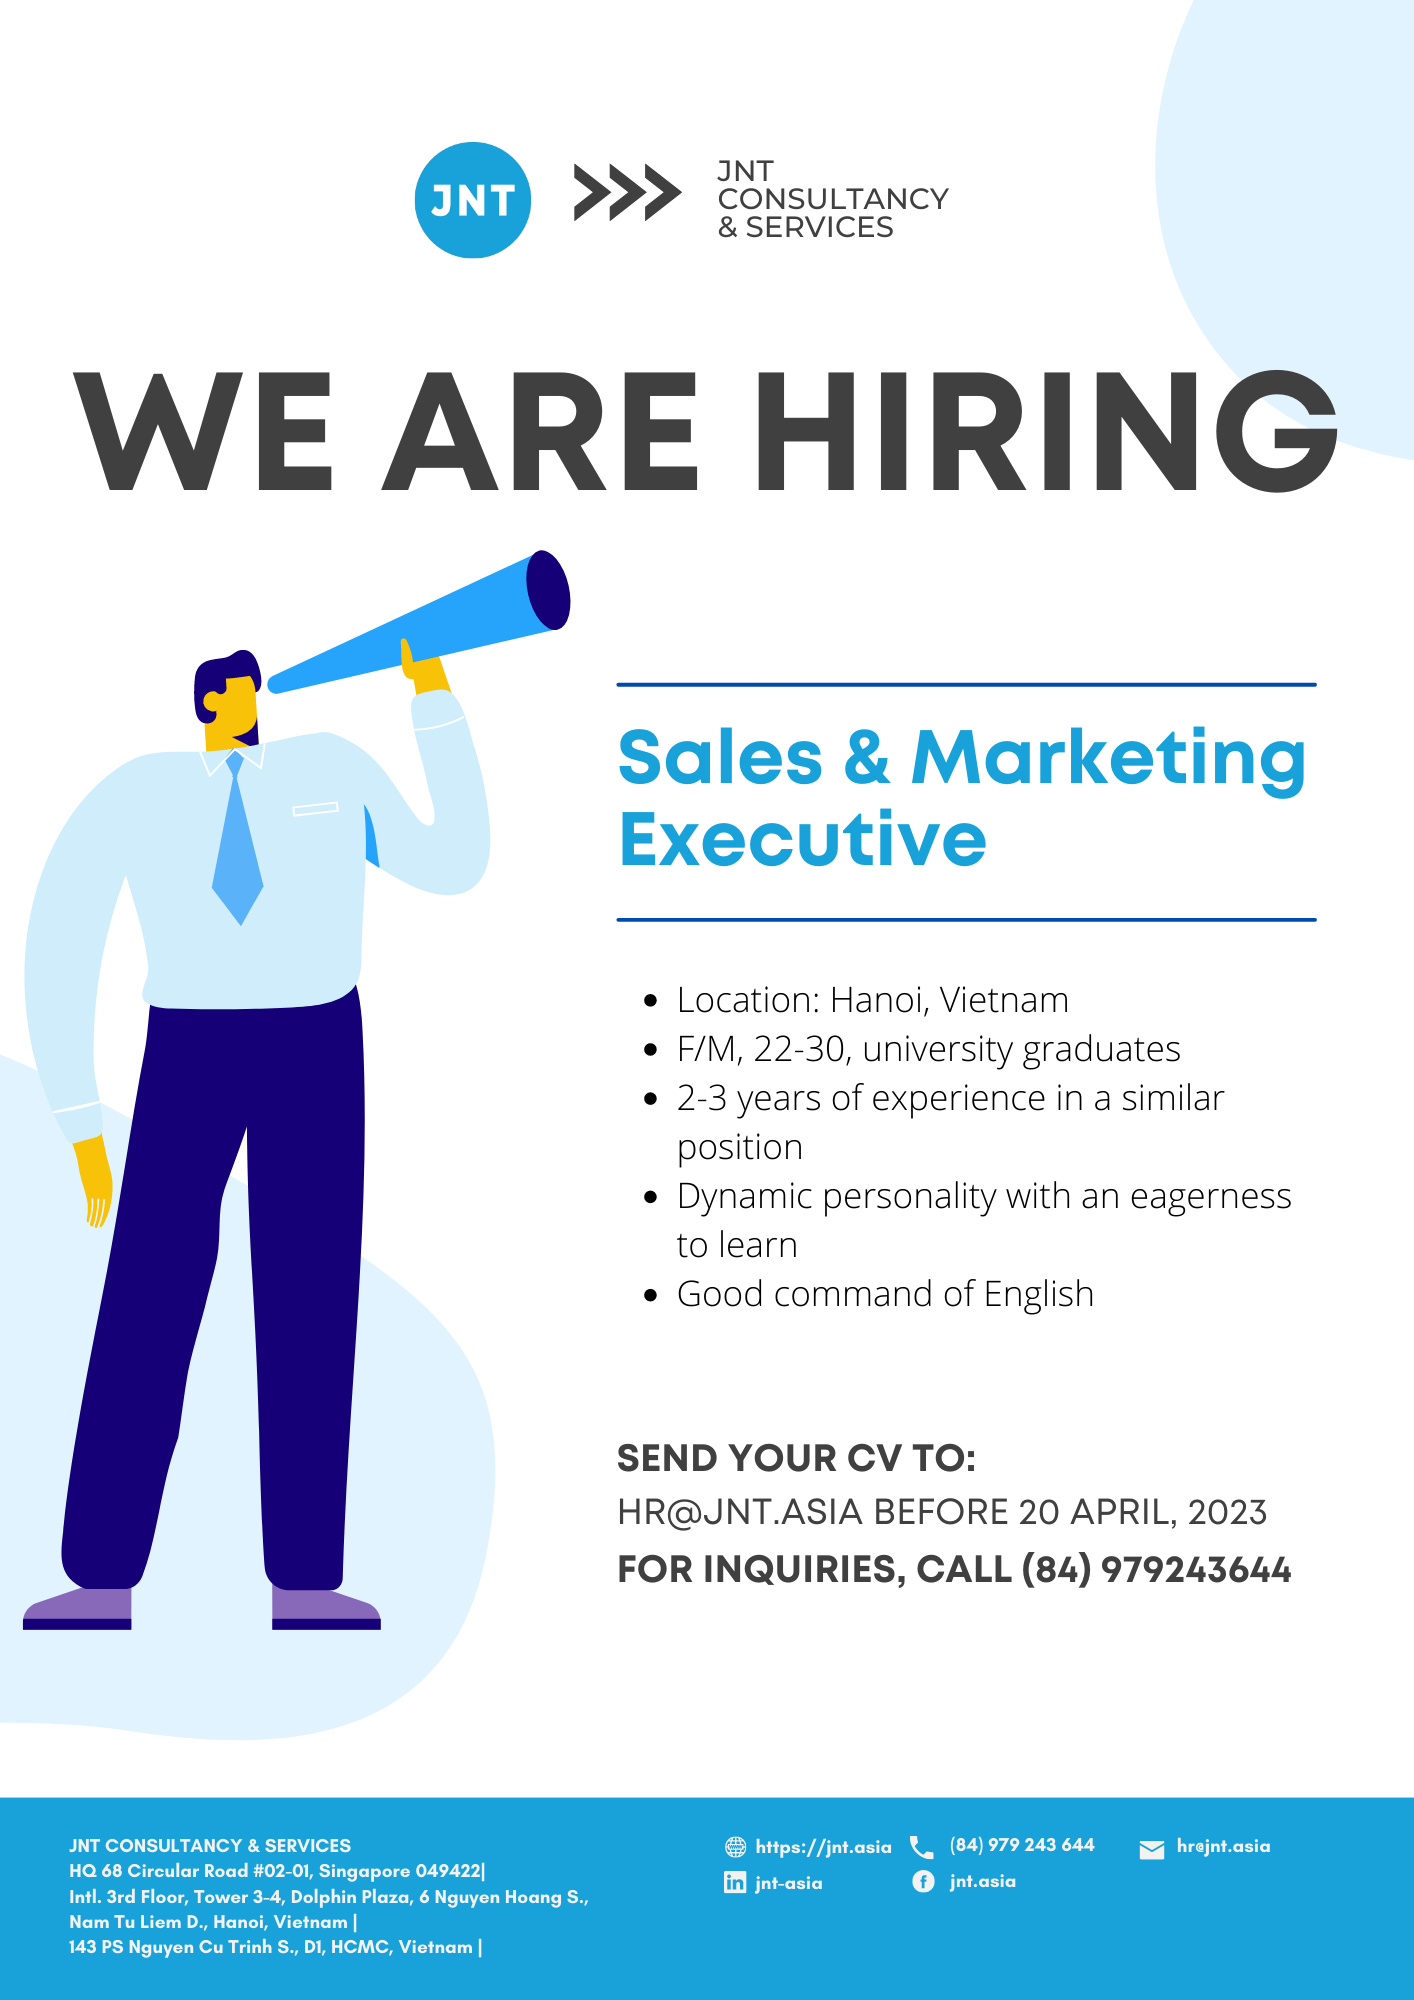 JNT Consultancy & Services hiring sales & marketing executive